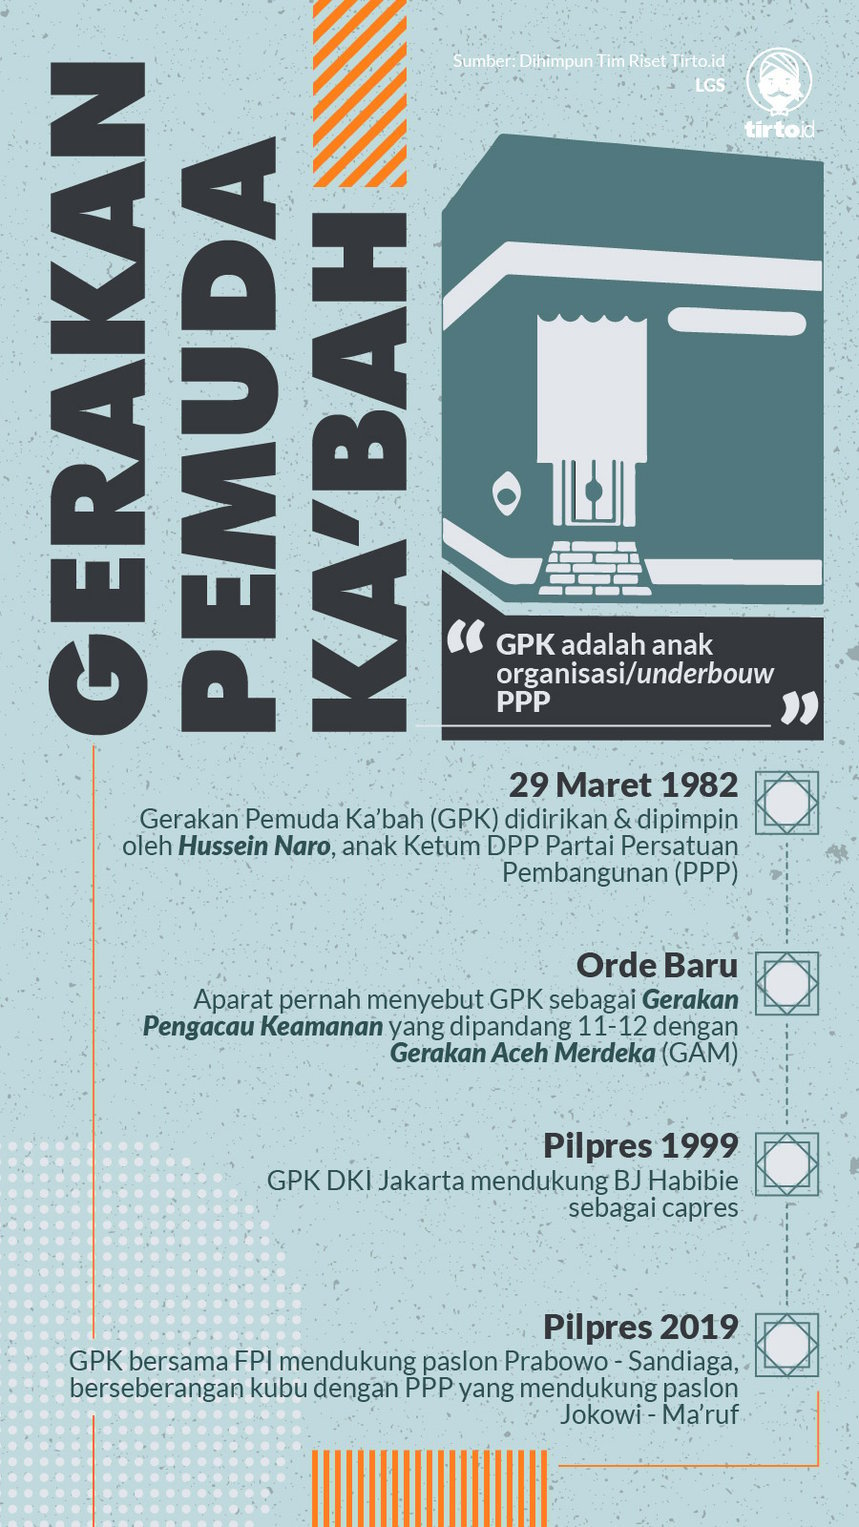 Infografik HL Indepth Intoleransi di Yogyakarta